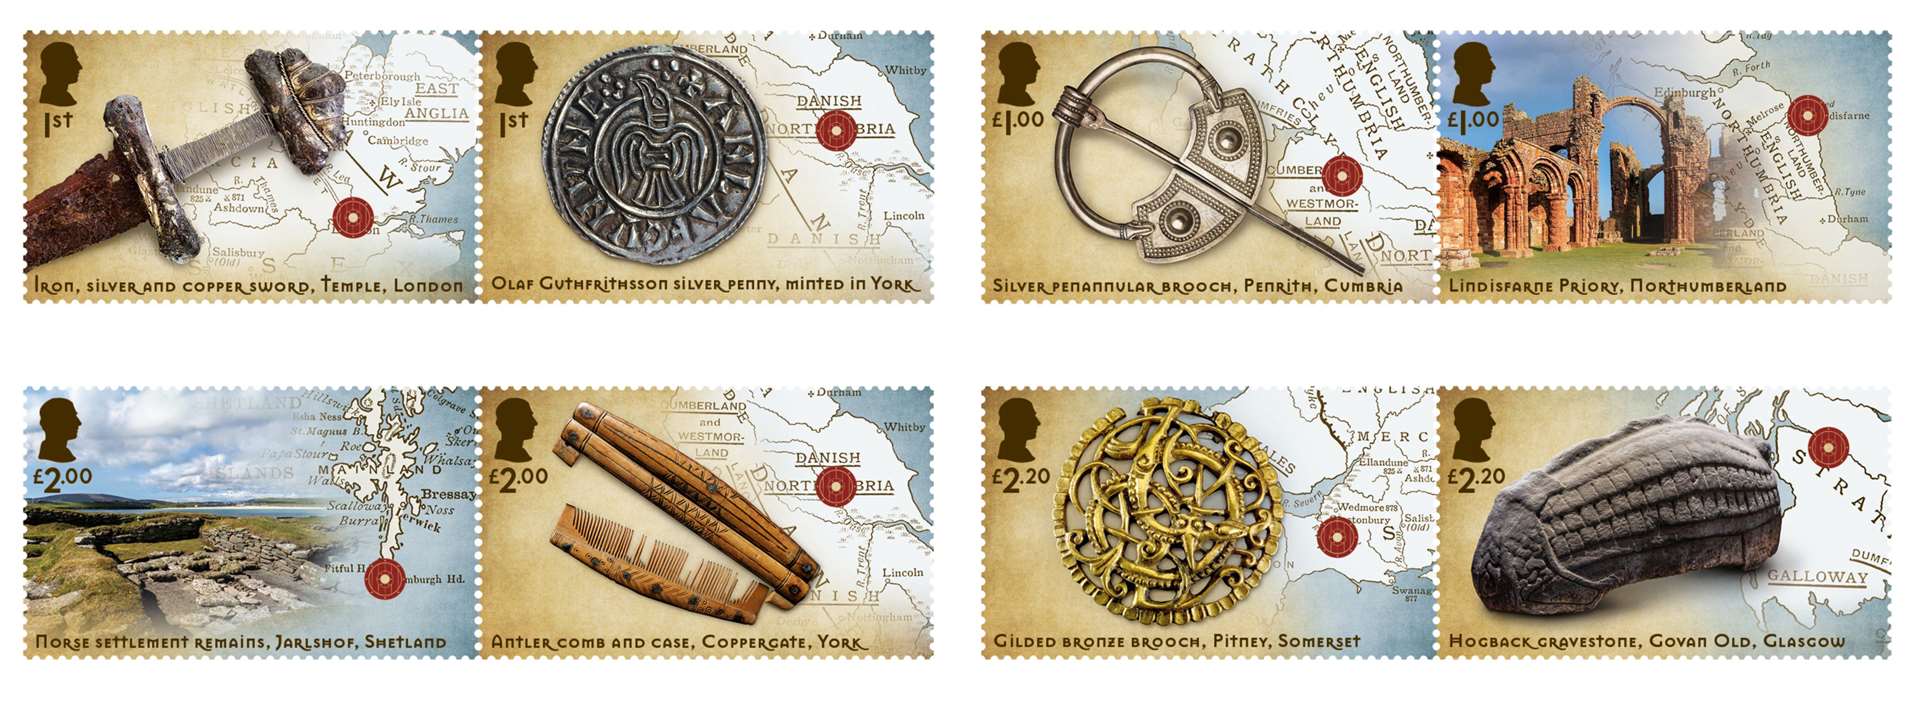 Viking Britain stamps (Royal Mail/PA)